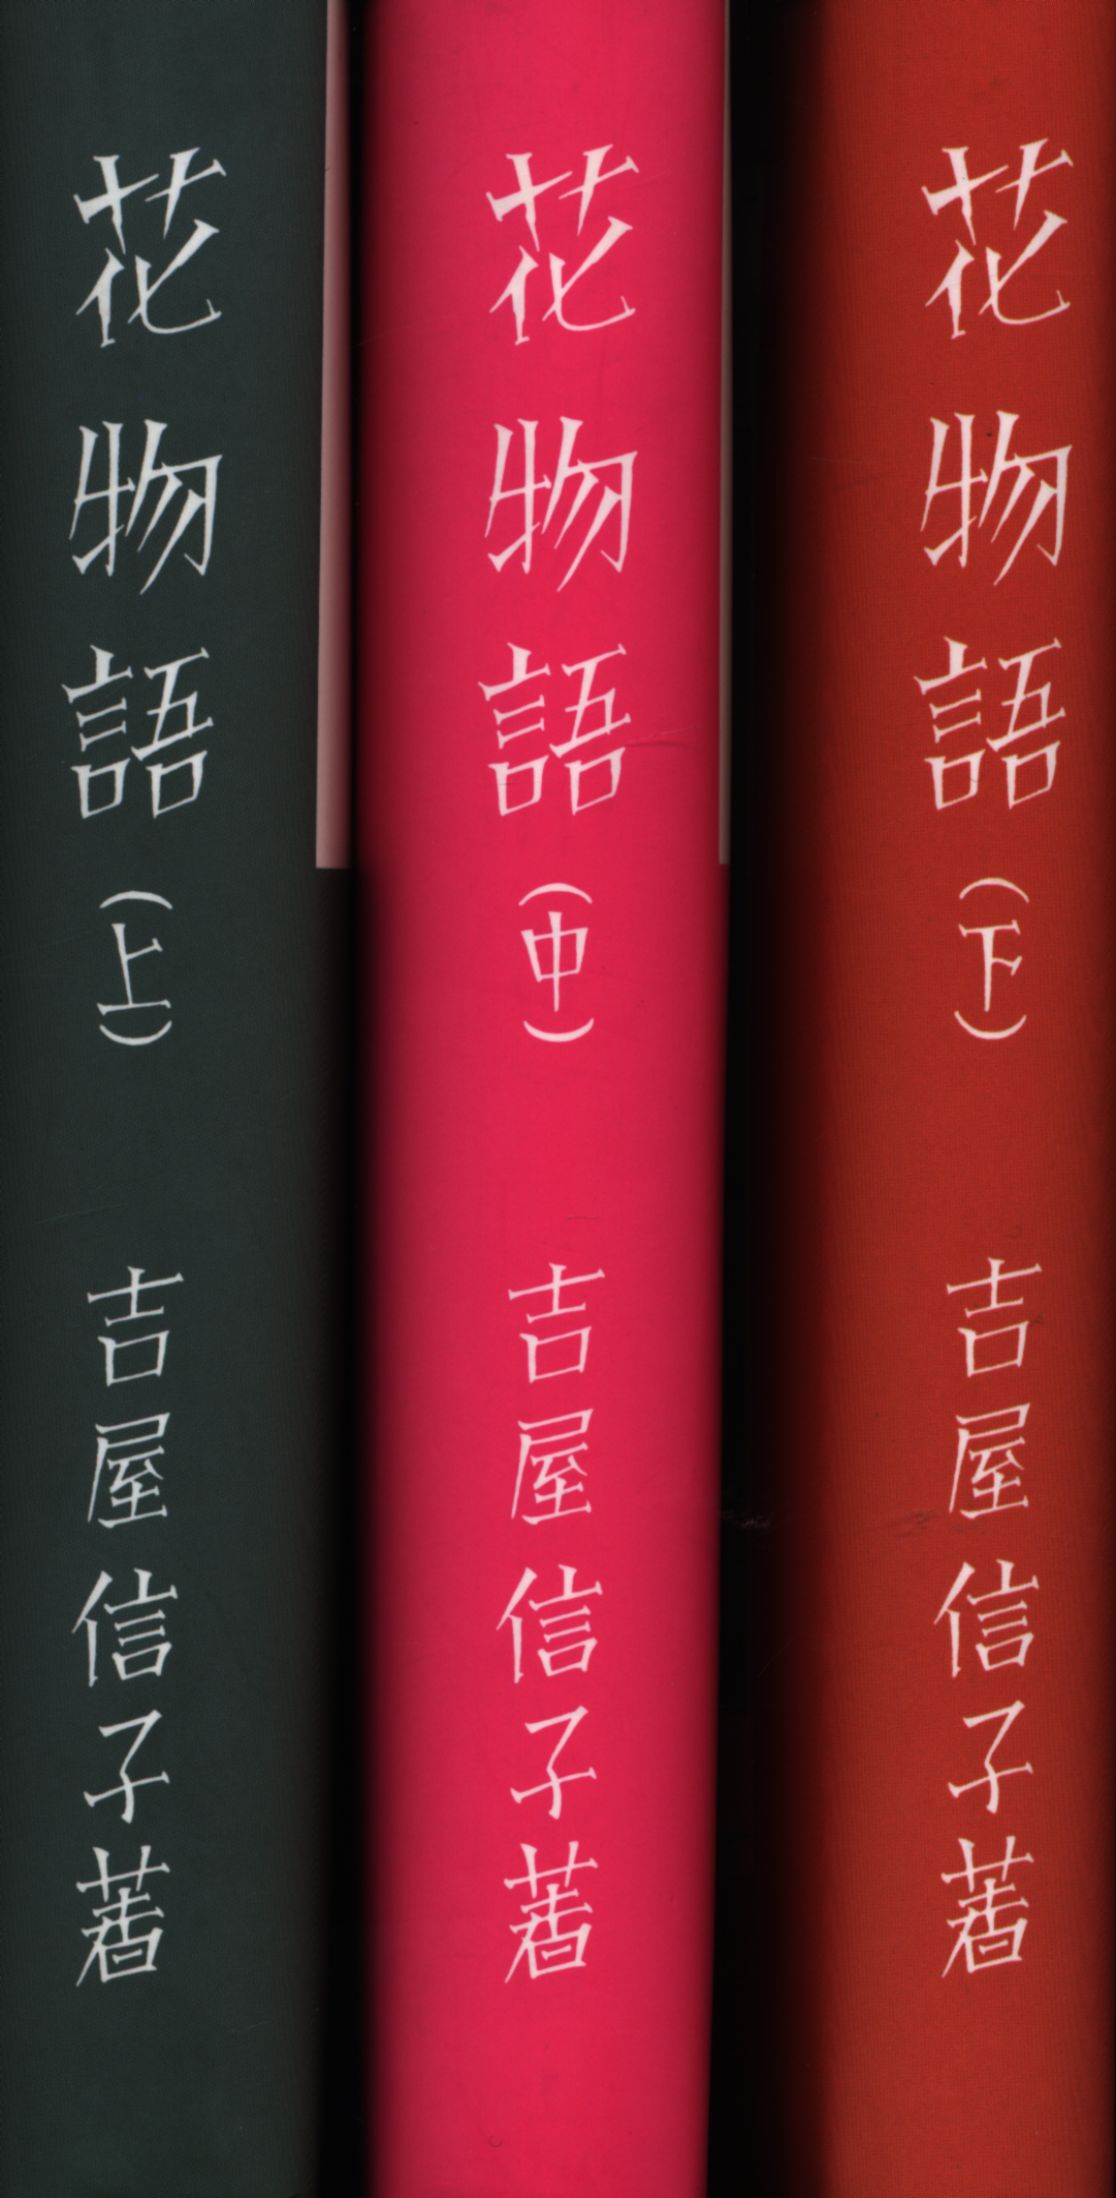 Junichi Paperback 1 Yoshiya Nobuko Hanamonogatari New Edition Complete 3 Volume Set Mandarake Online Shop